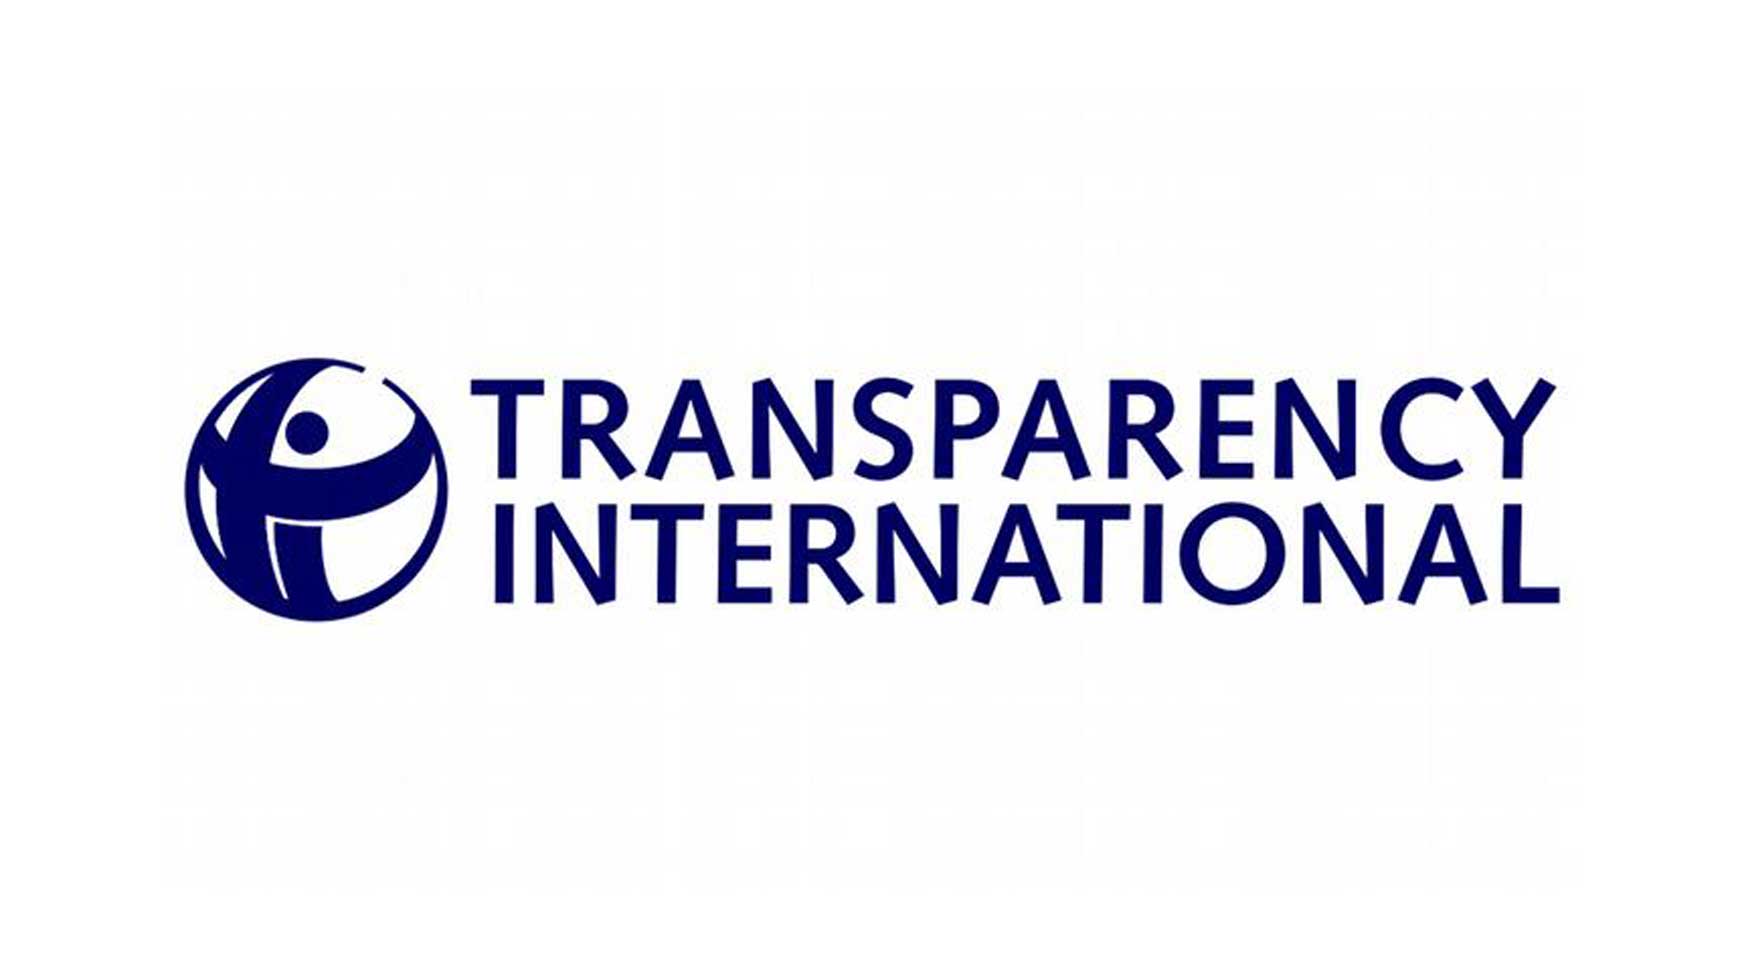 UAWire Transparency International names lobbyists on behalf of